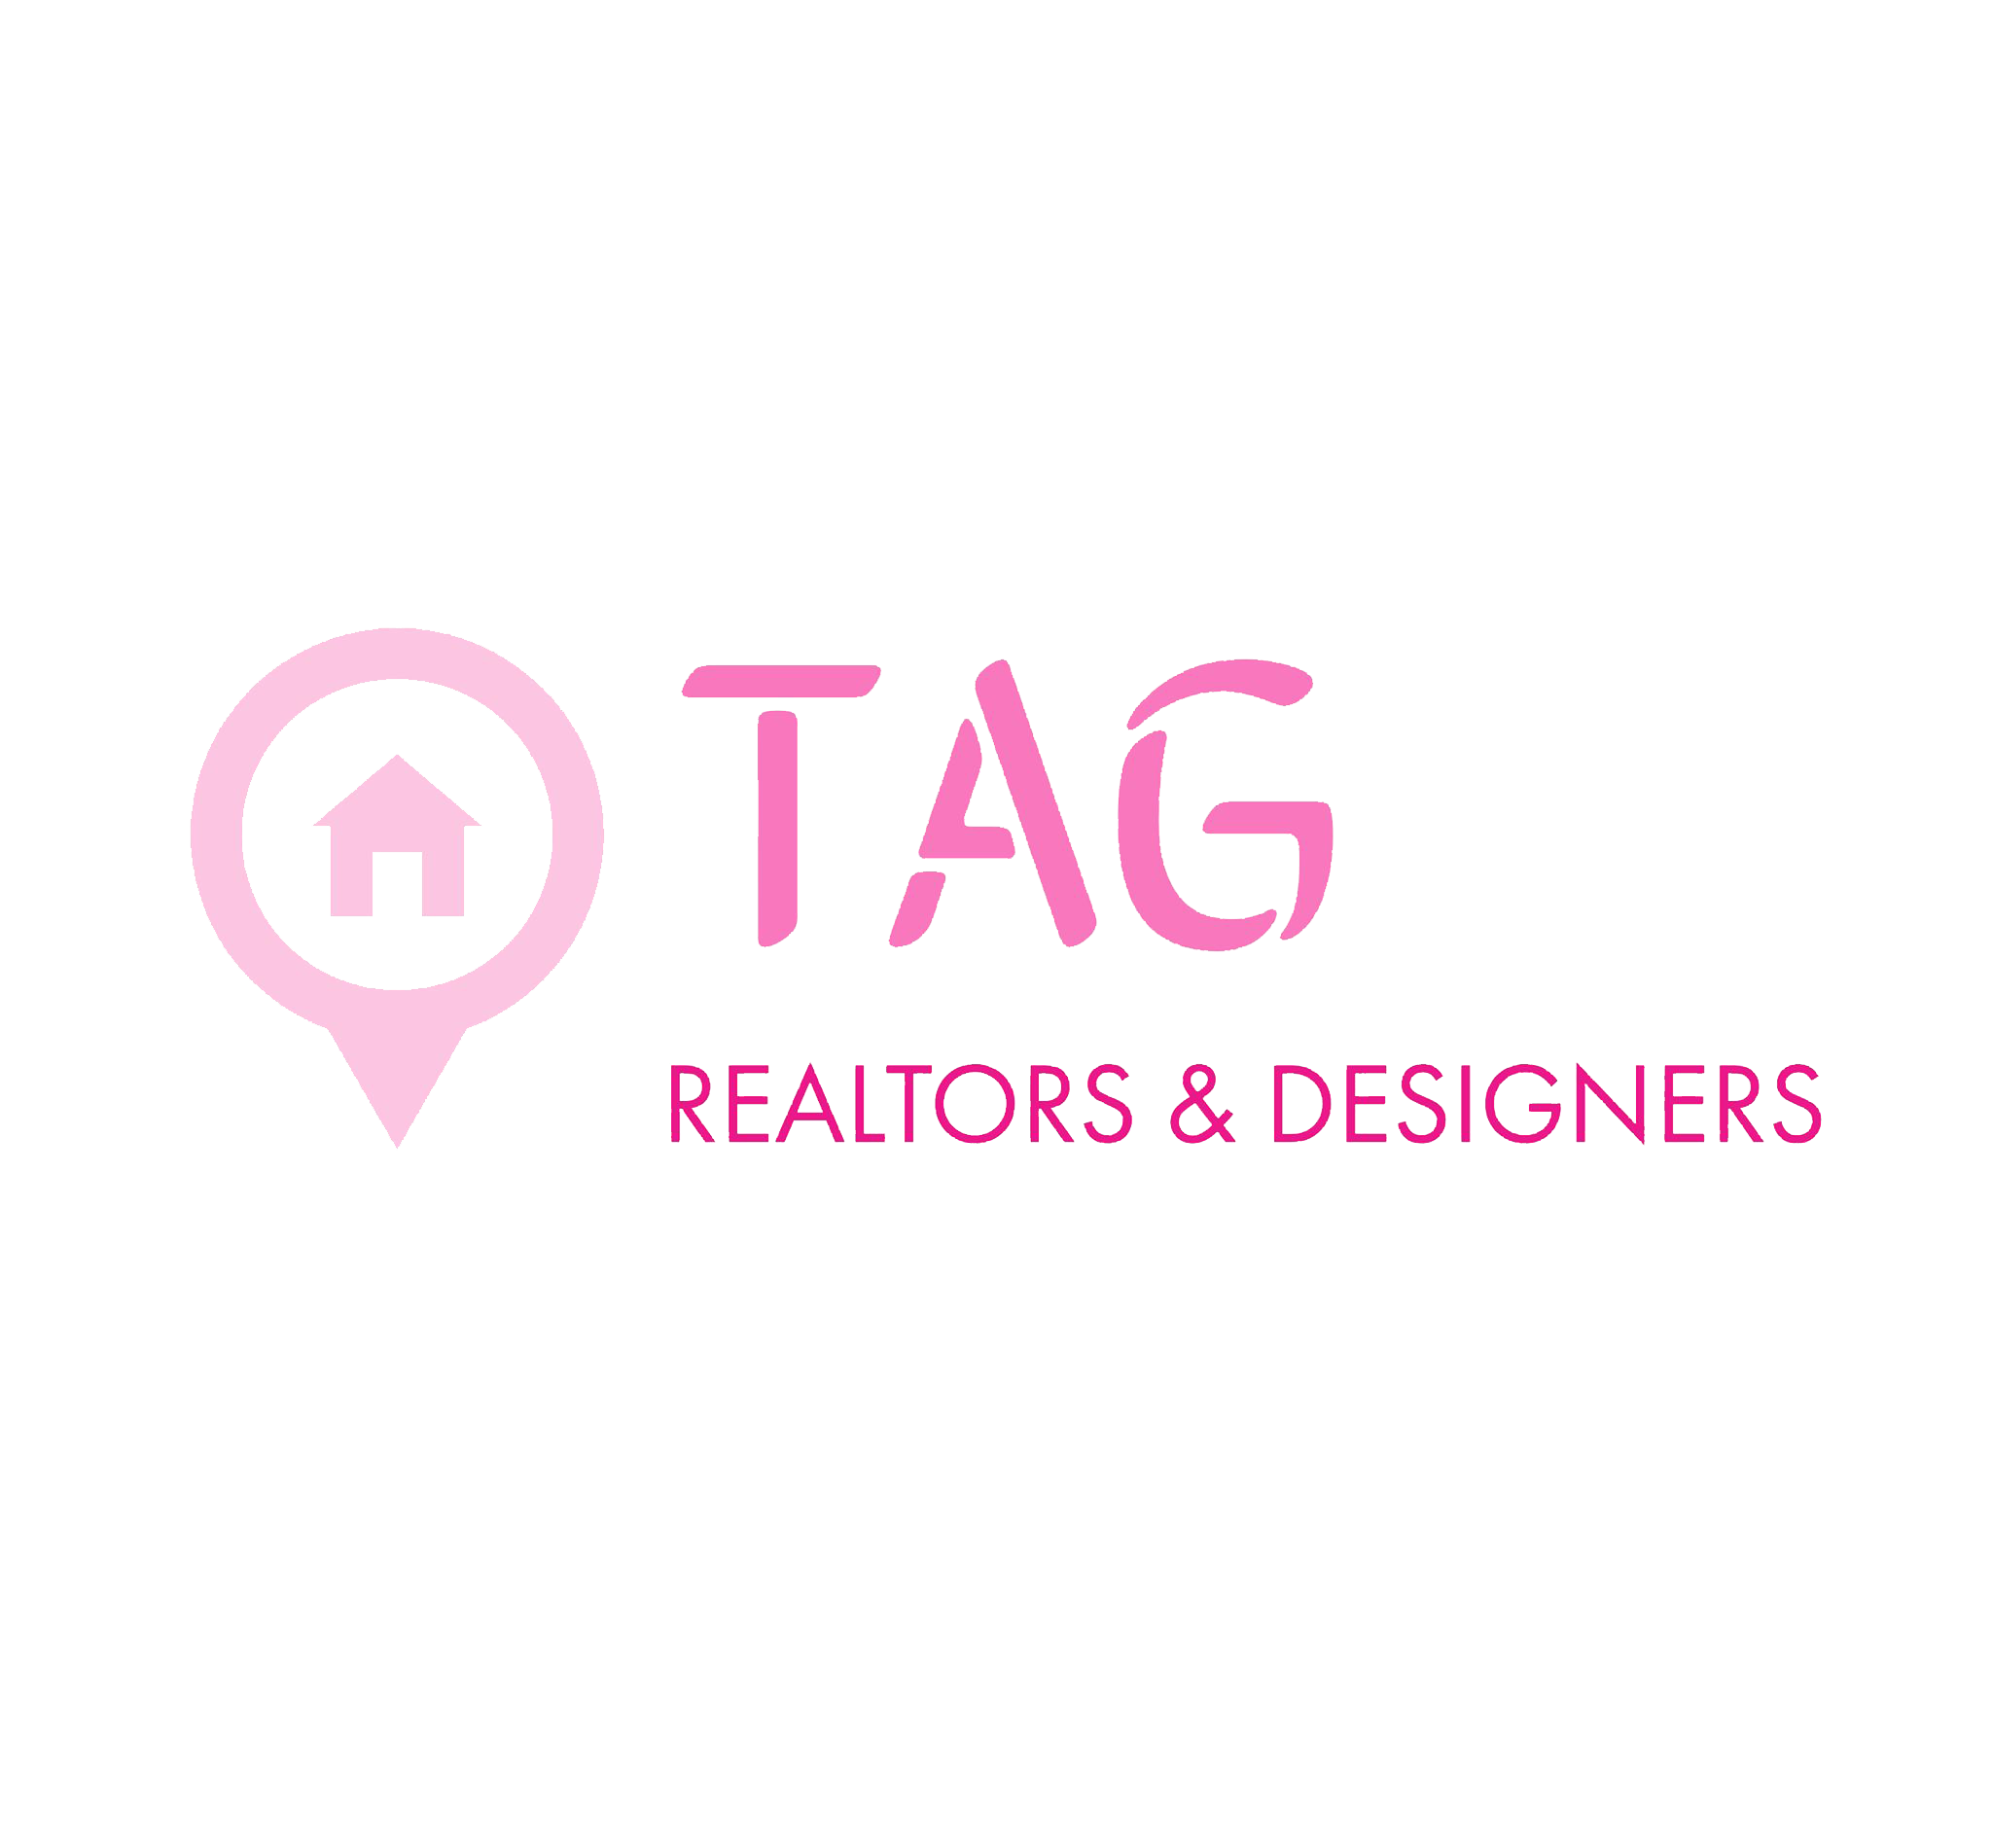 Tag Realtors and Designers